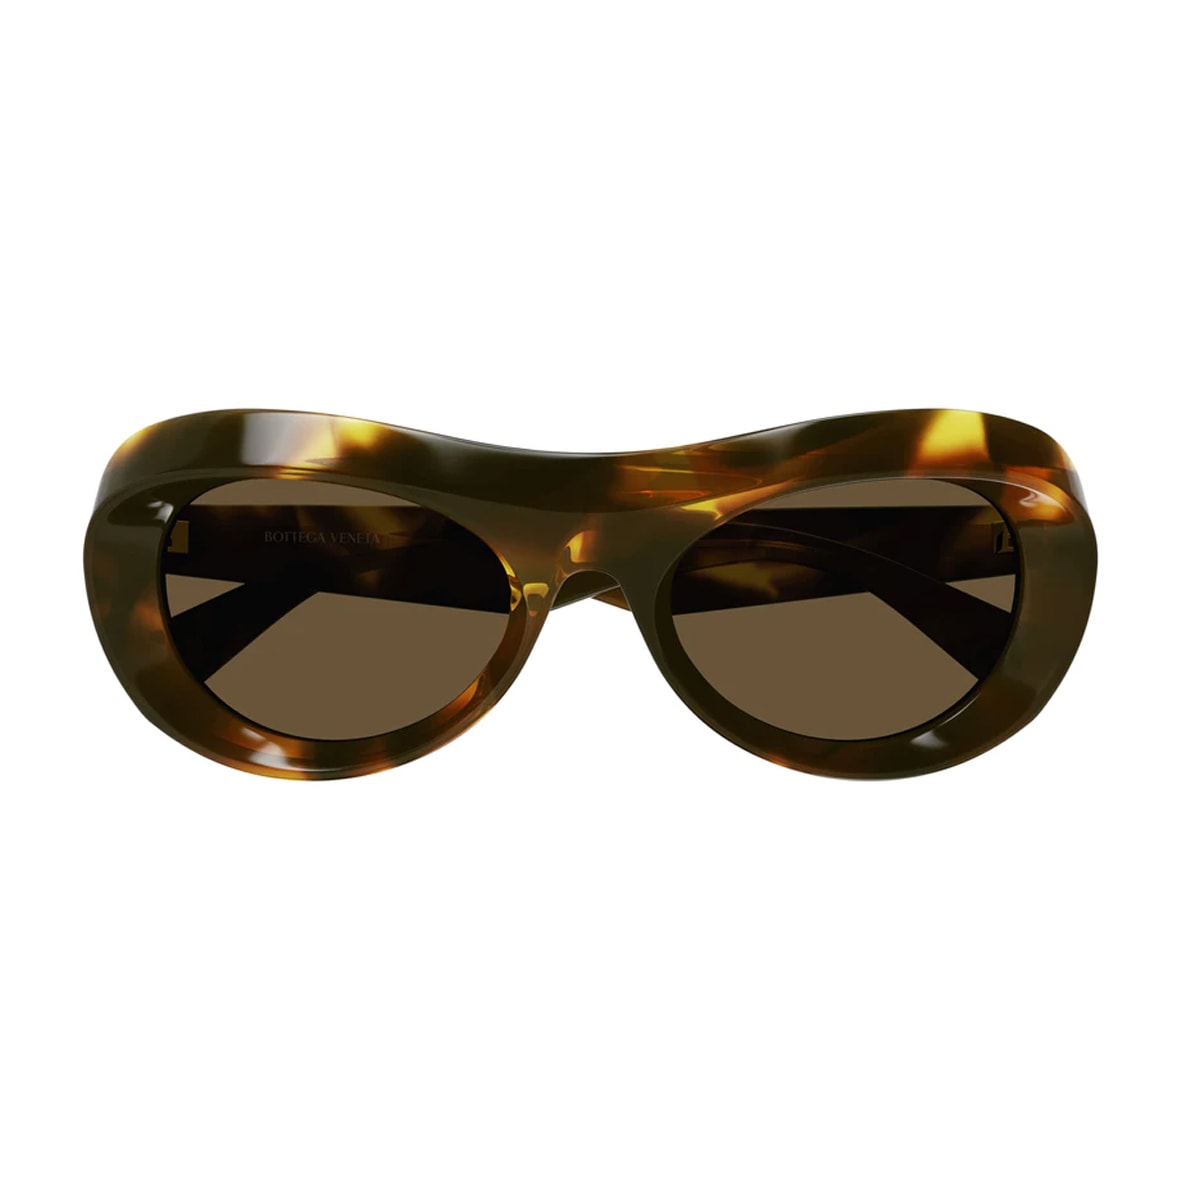 Bv1284s Linea New Classic 002 Sunglasses